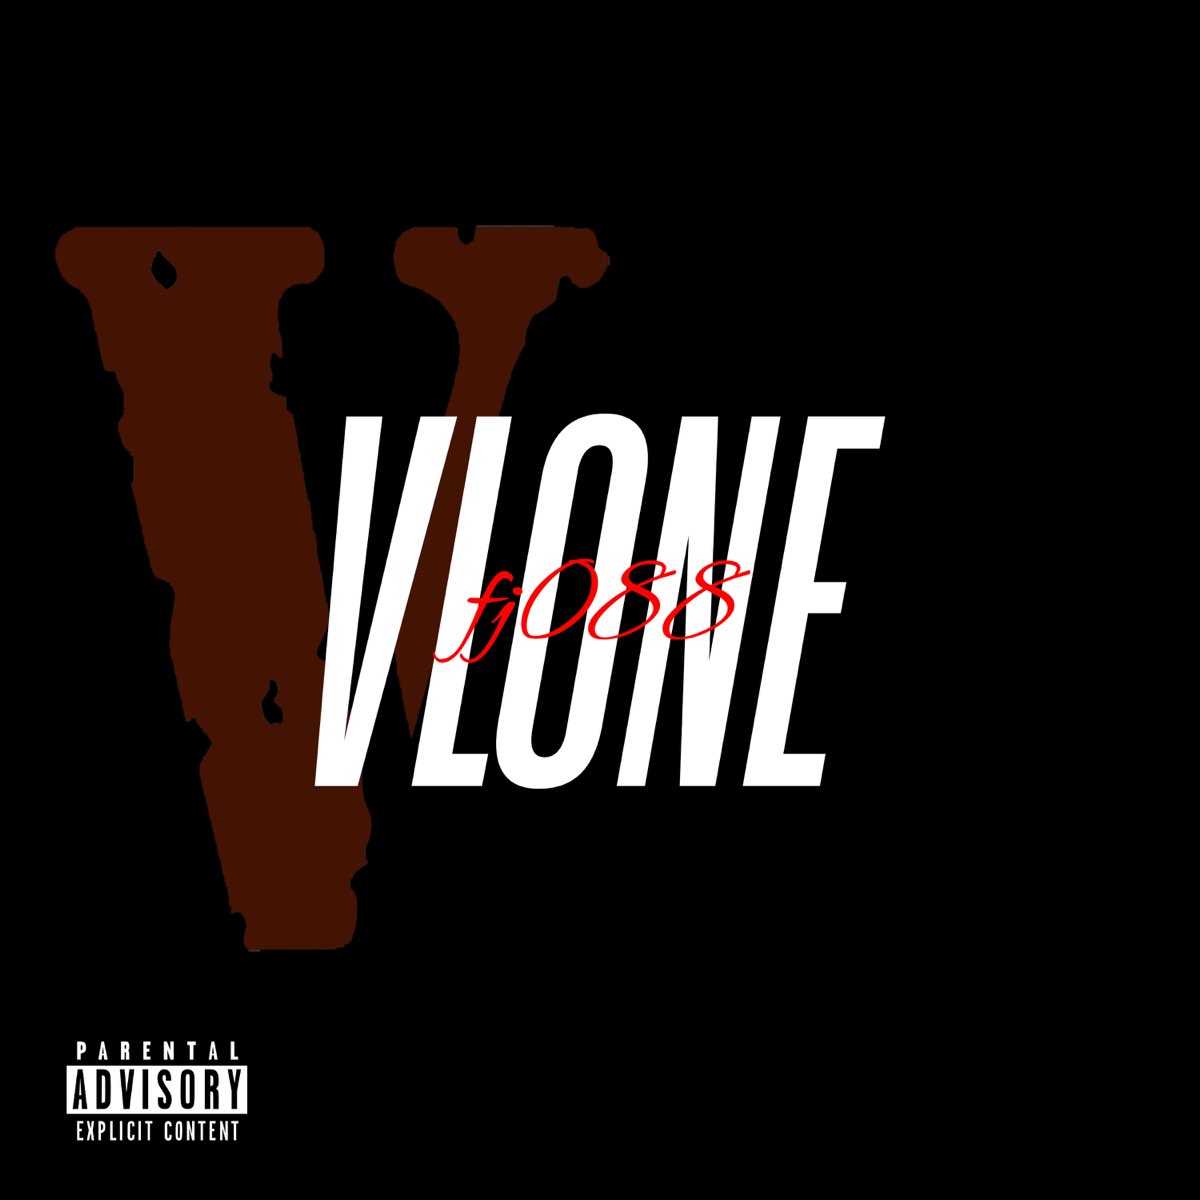 Vlone - Single by FJ088 on Apple Music